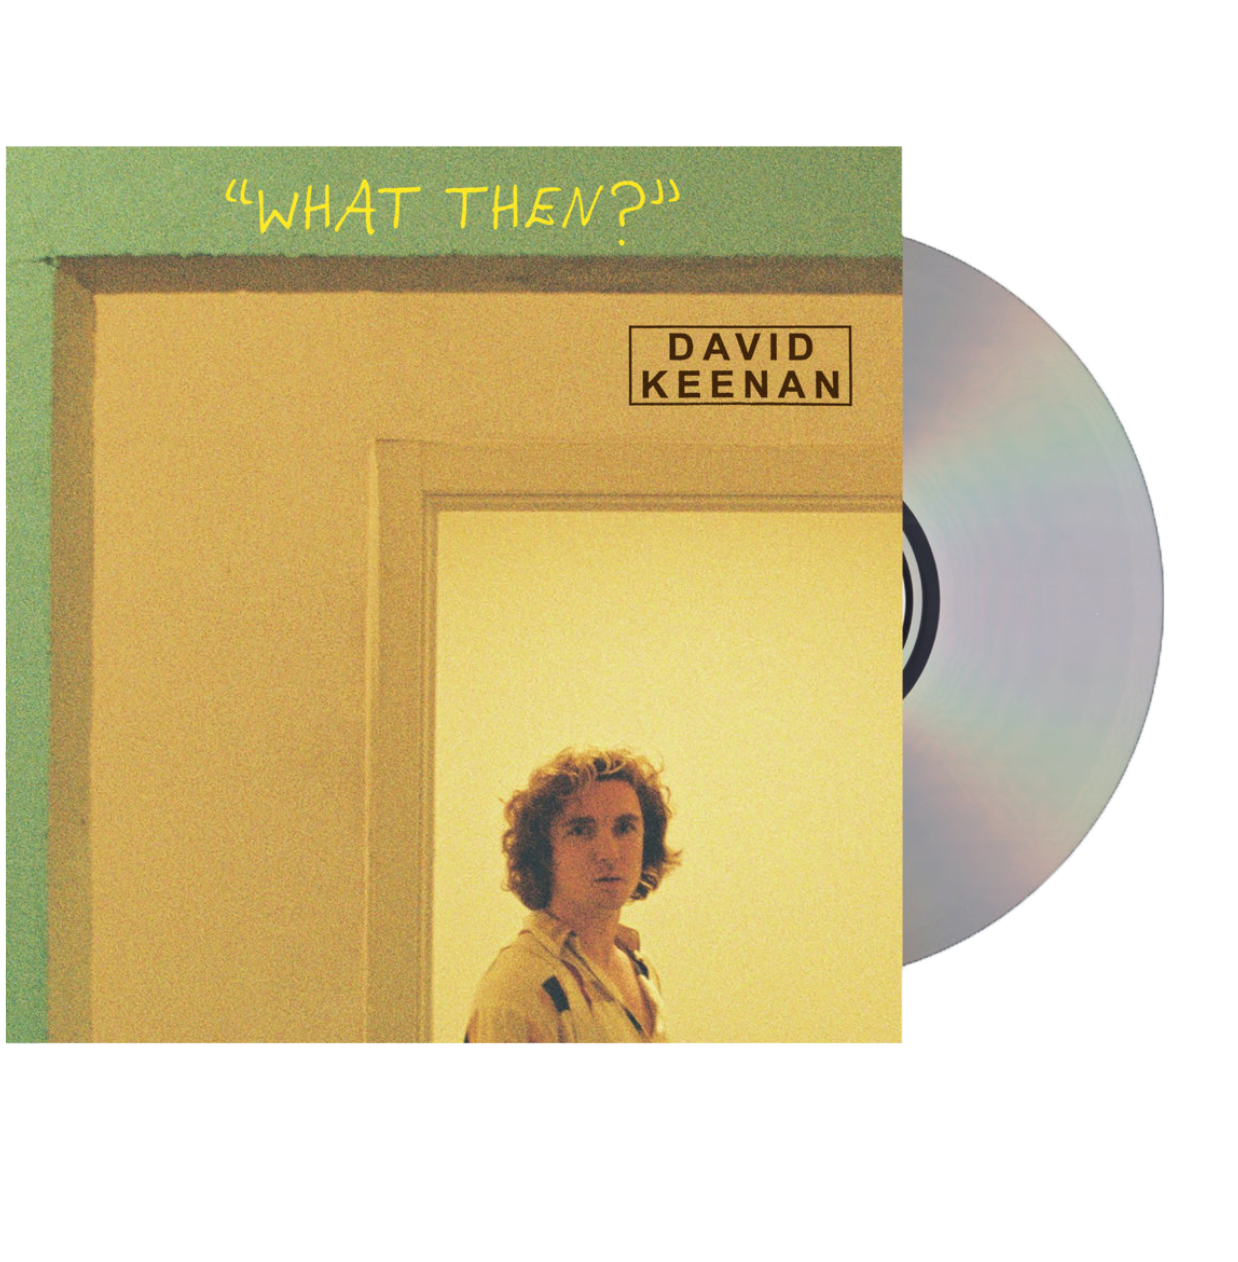 DAVID KEENAN - "WHAT THEN?" [CD]